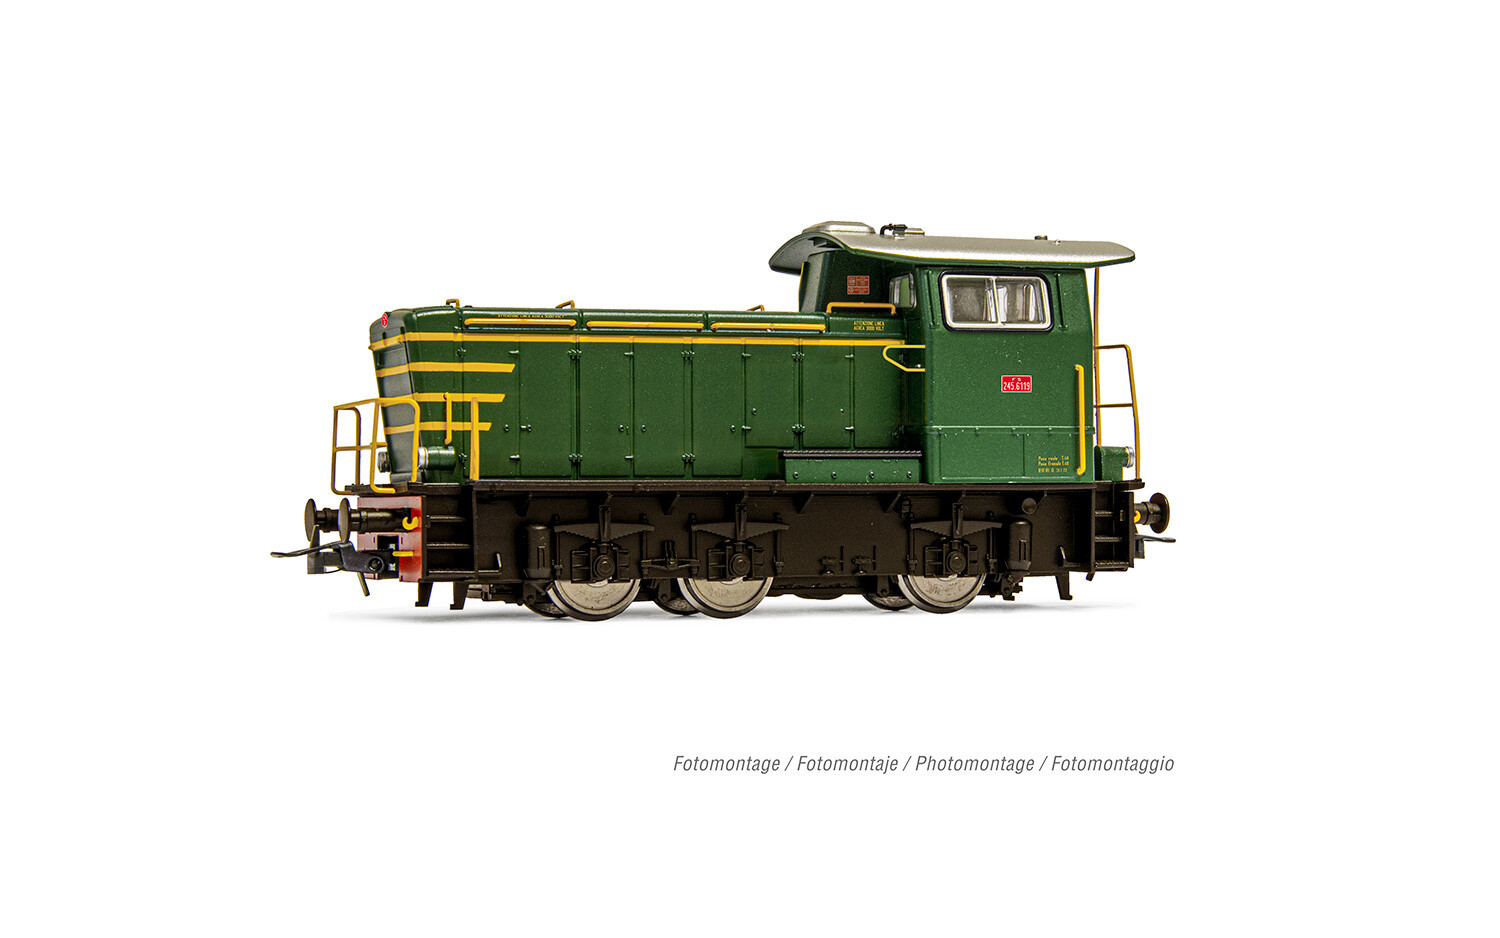 FS D245 Diesel Locomotive Green/Yellow IV